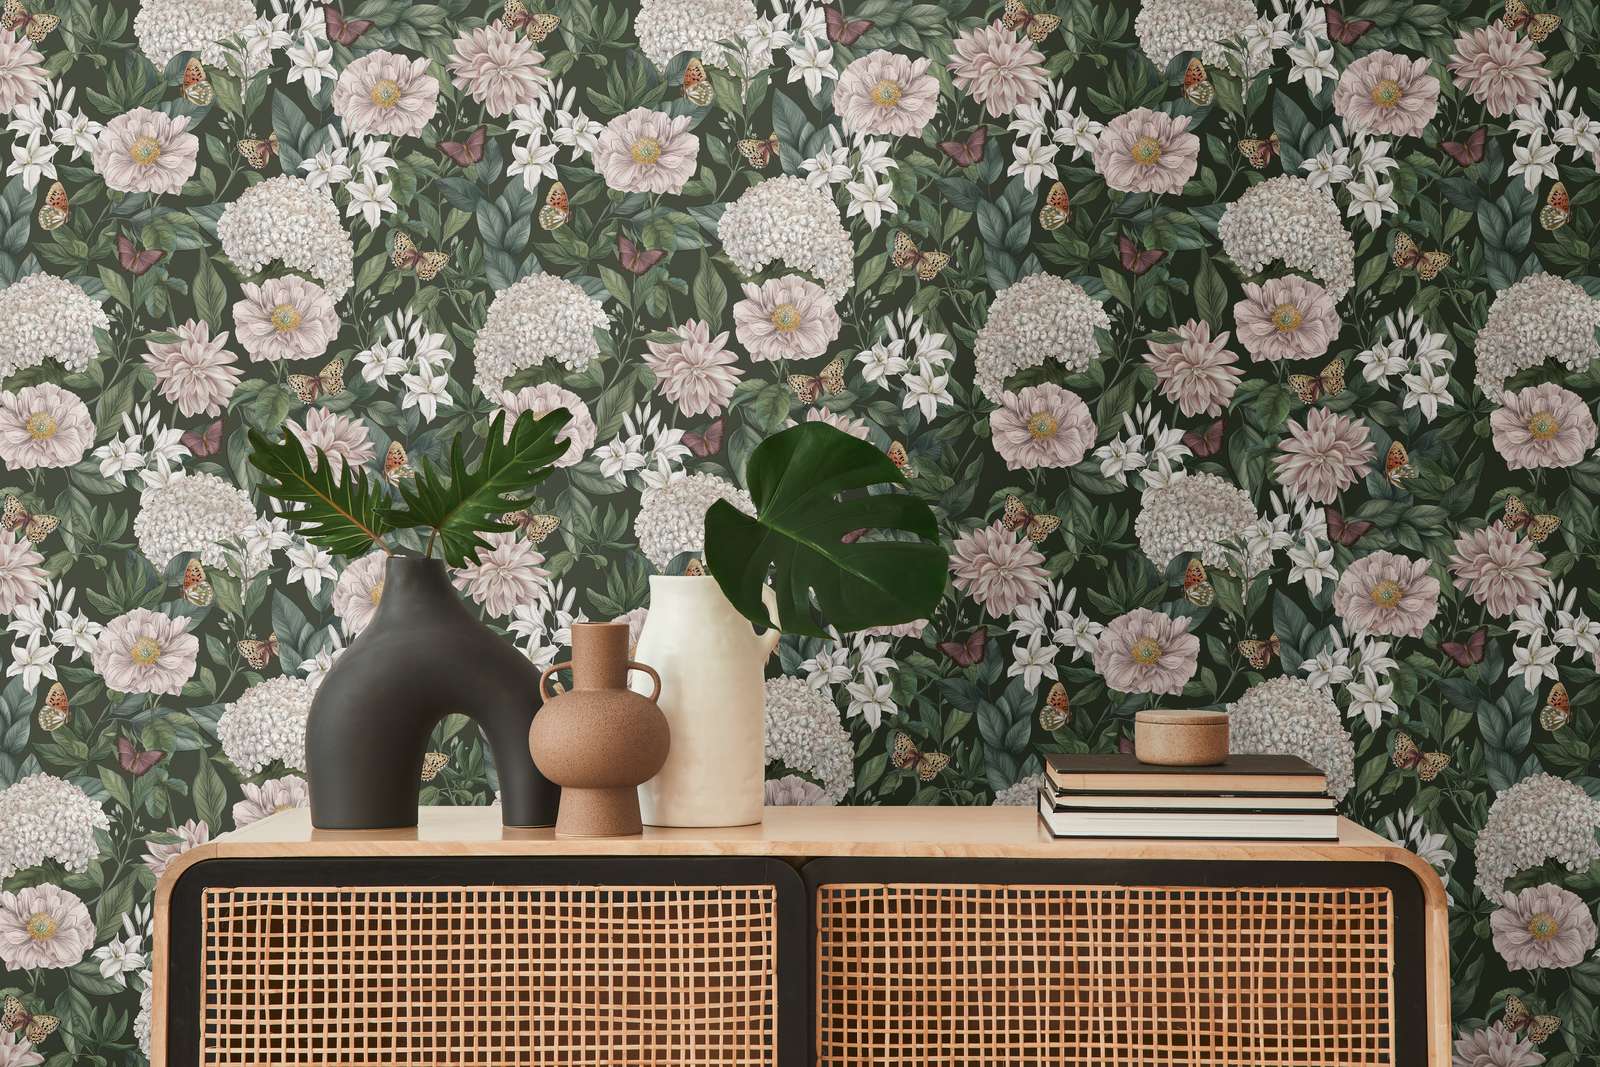             Modern floral style wallpaper with flowers & butterflies textured - black, dark green, white
        